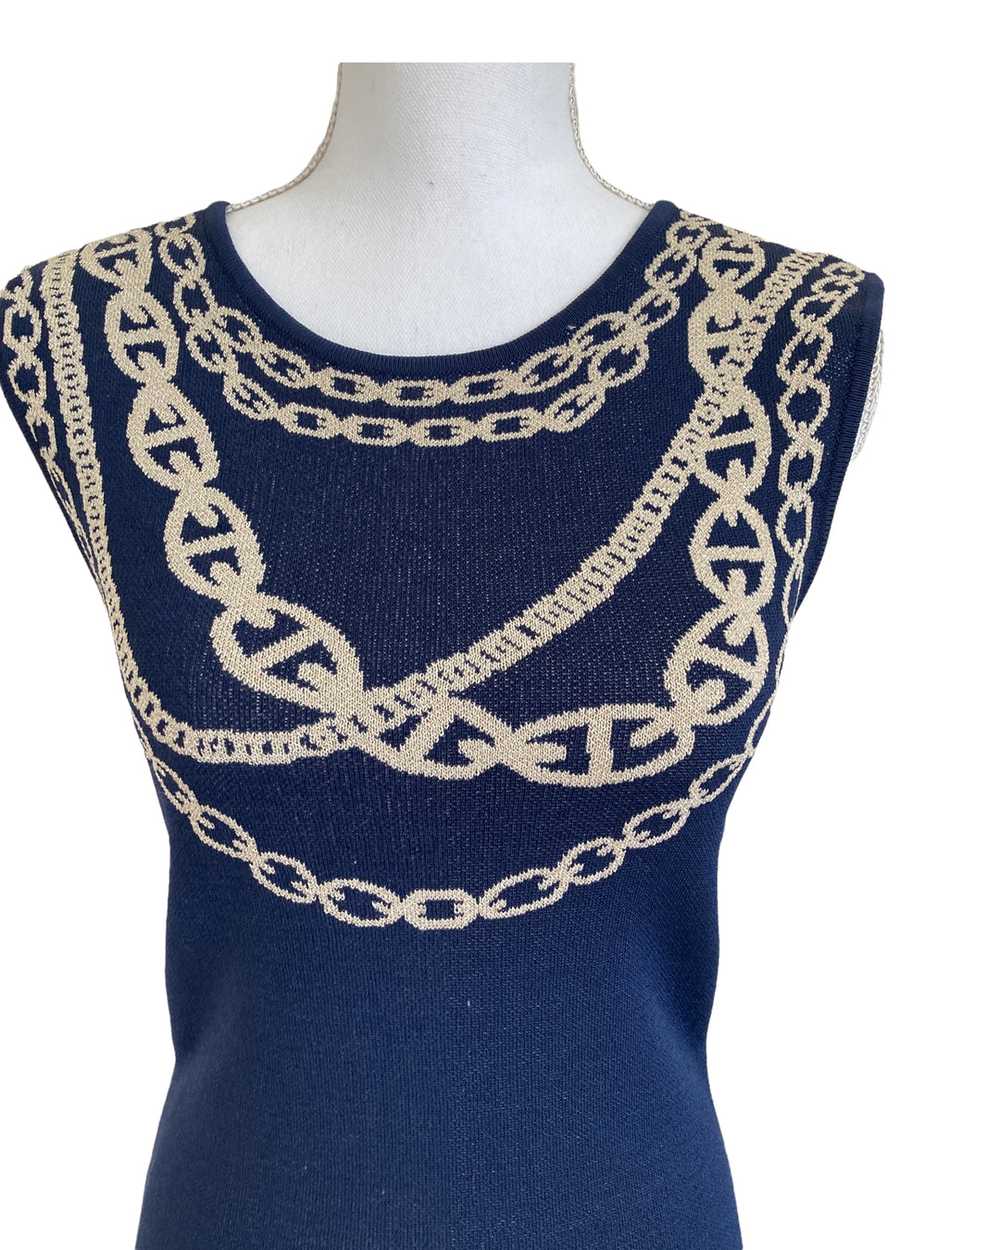 Adrienne Vittadini Navy Knit Dress, S - image 2